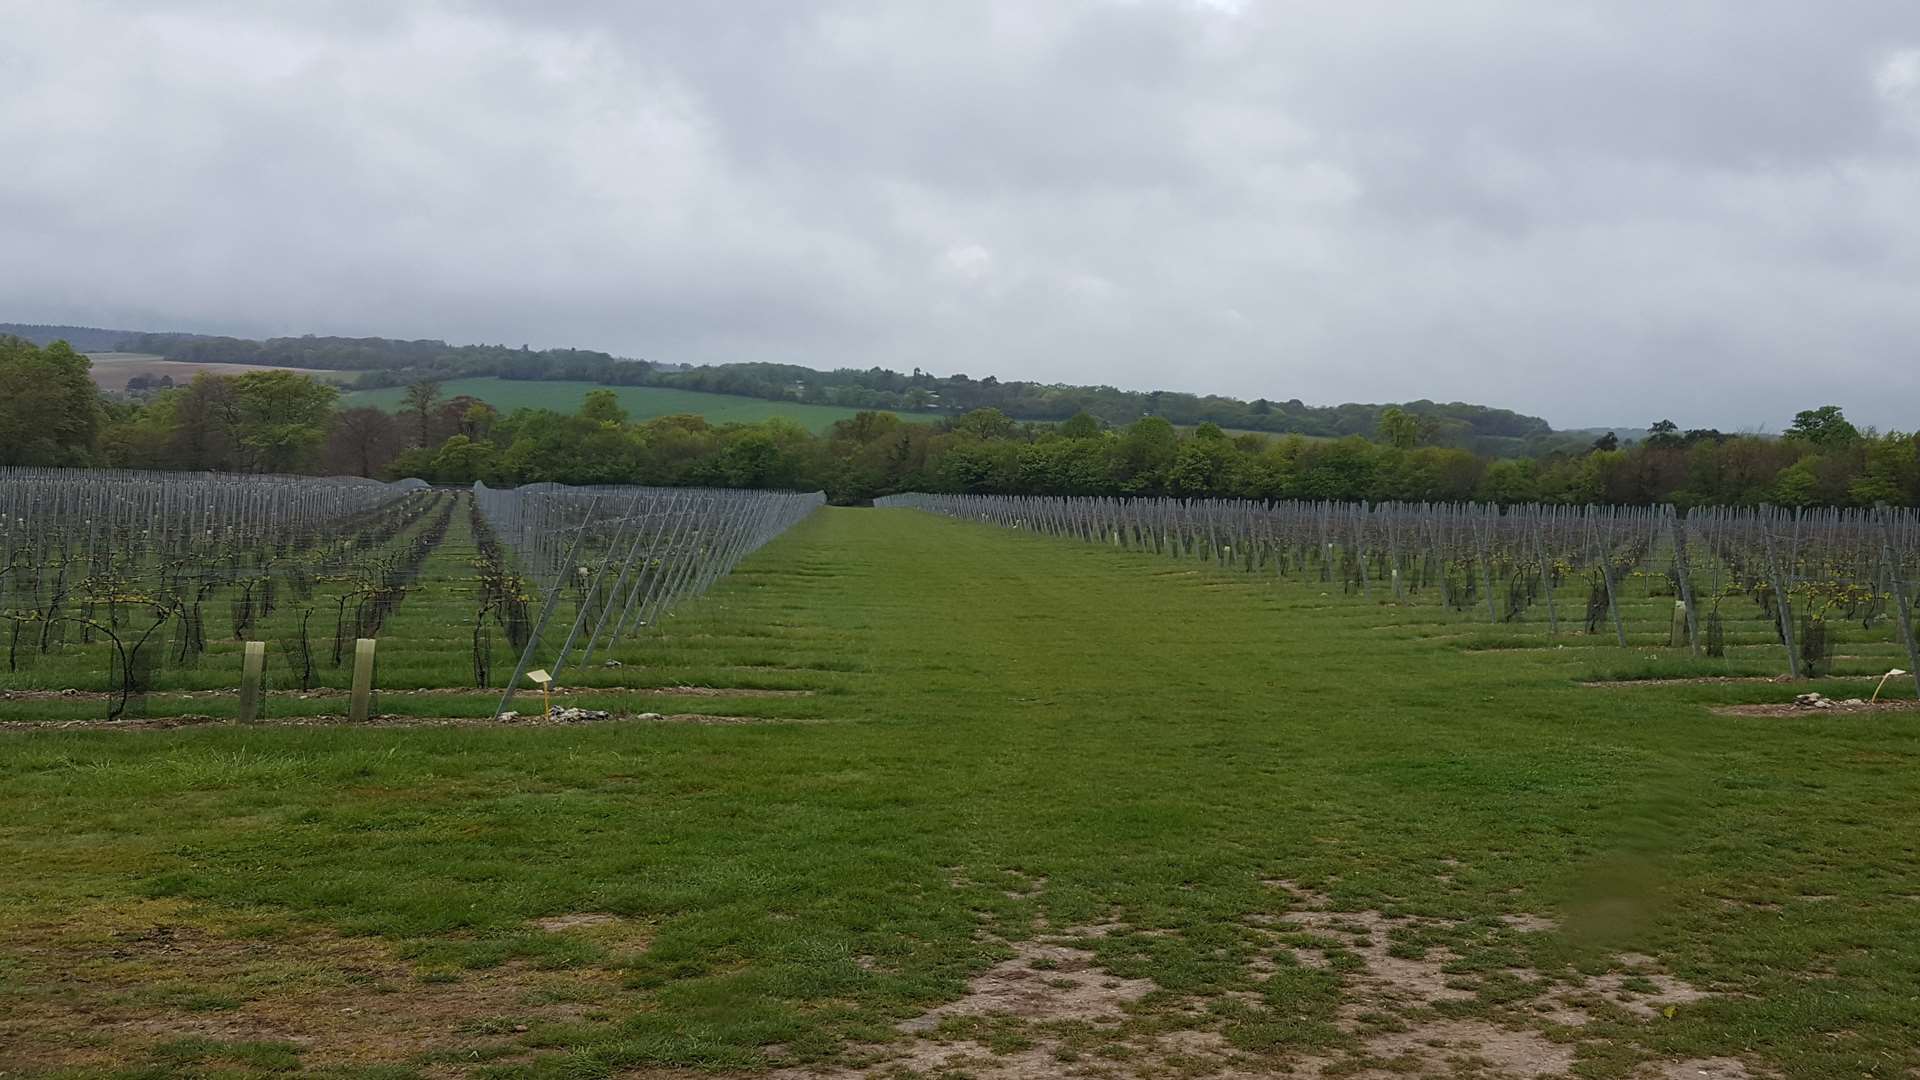 A Simpsons Wine Estate vineyard in Barham, near Canterbury